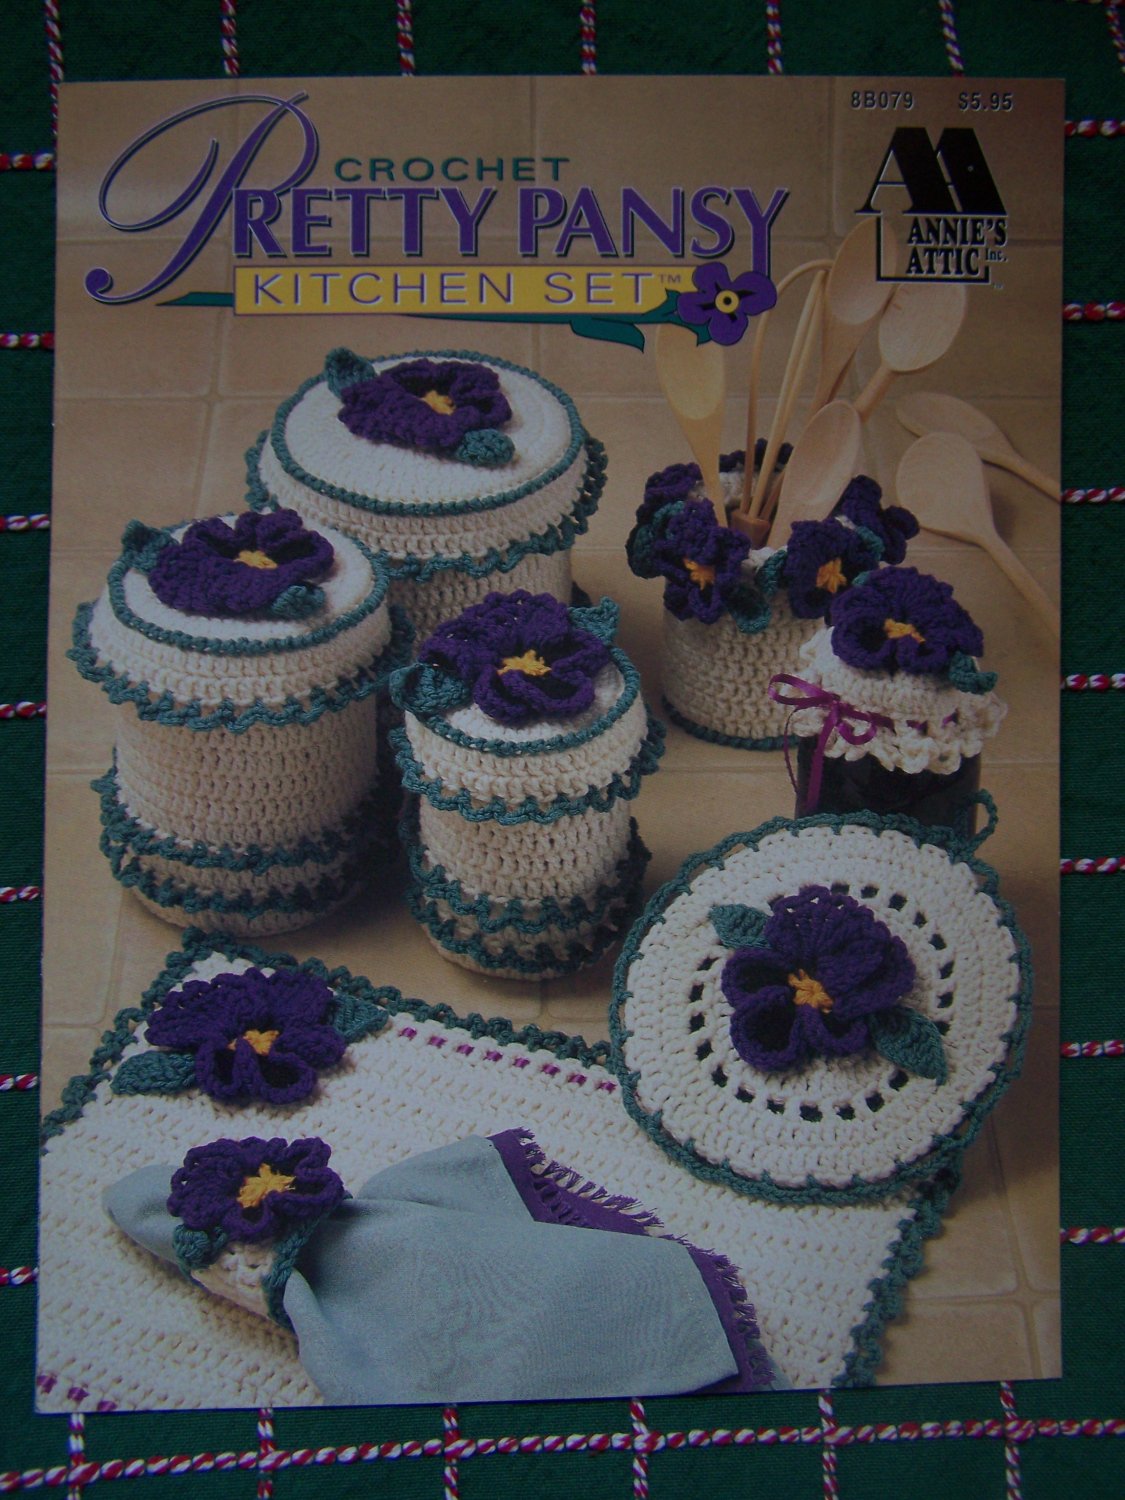 New Annies Attic Crochet Patterns Pretty Pansy Kitchen Set 8B079